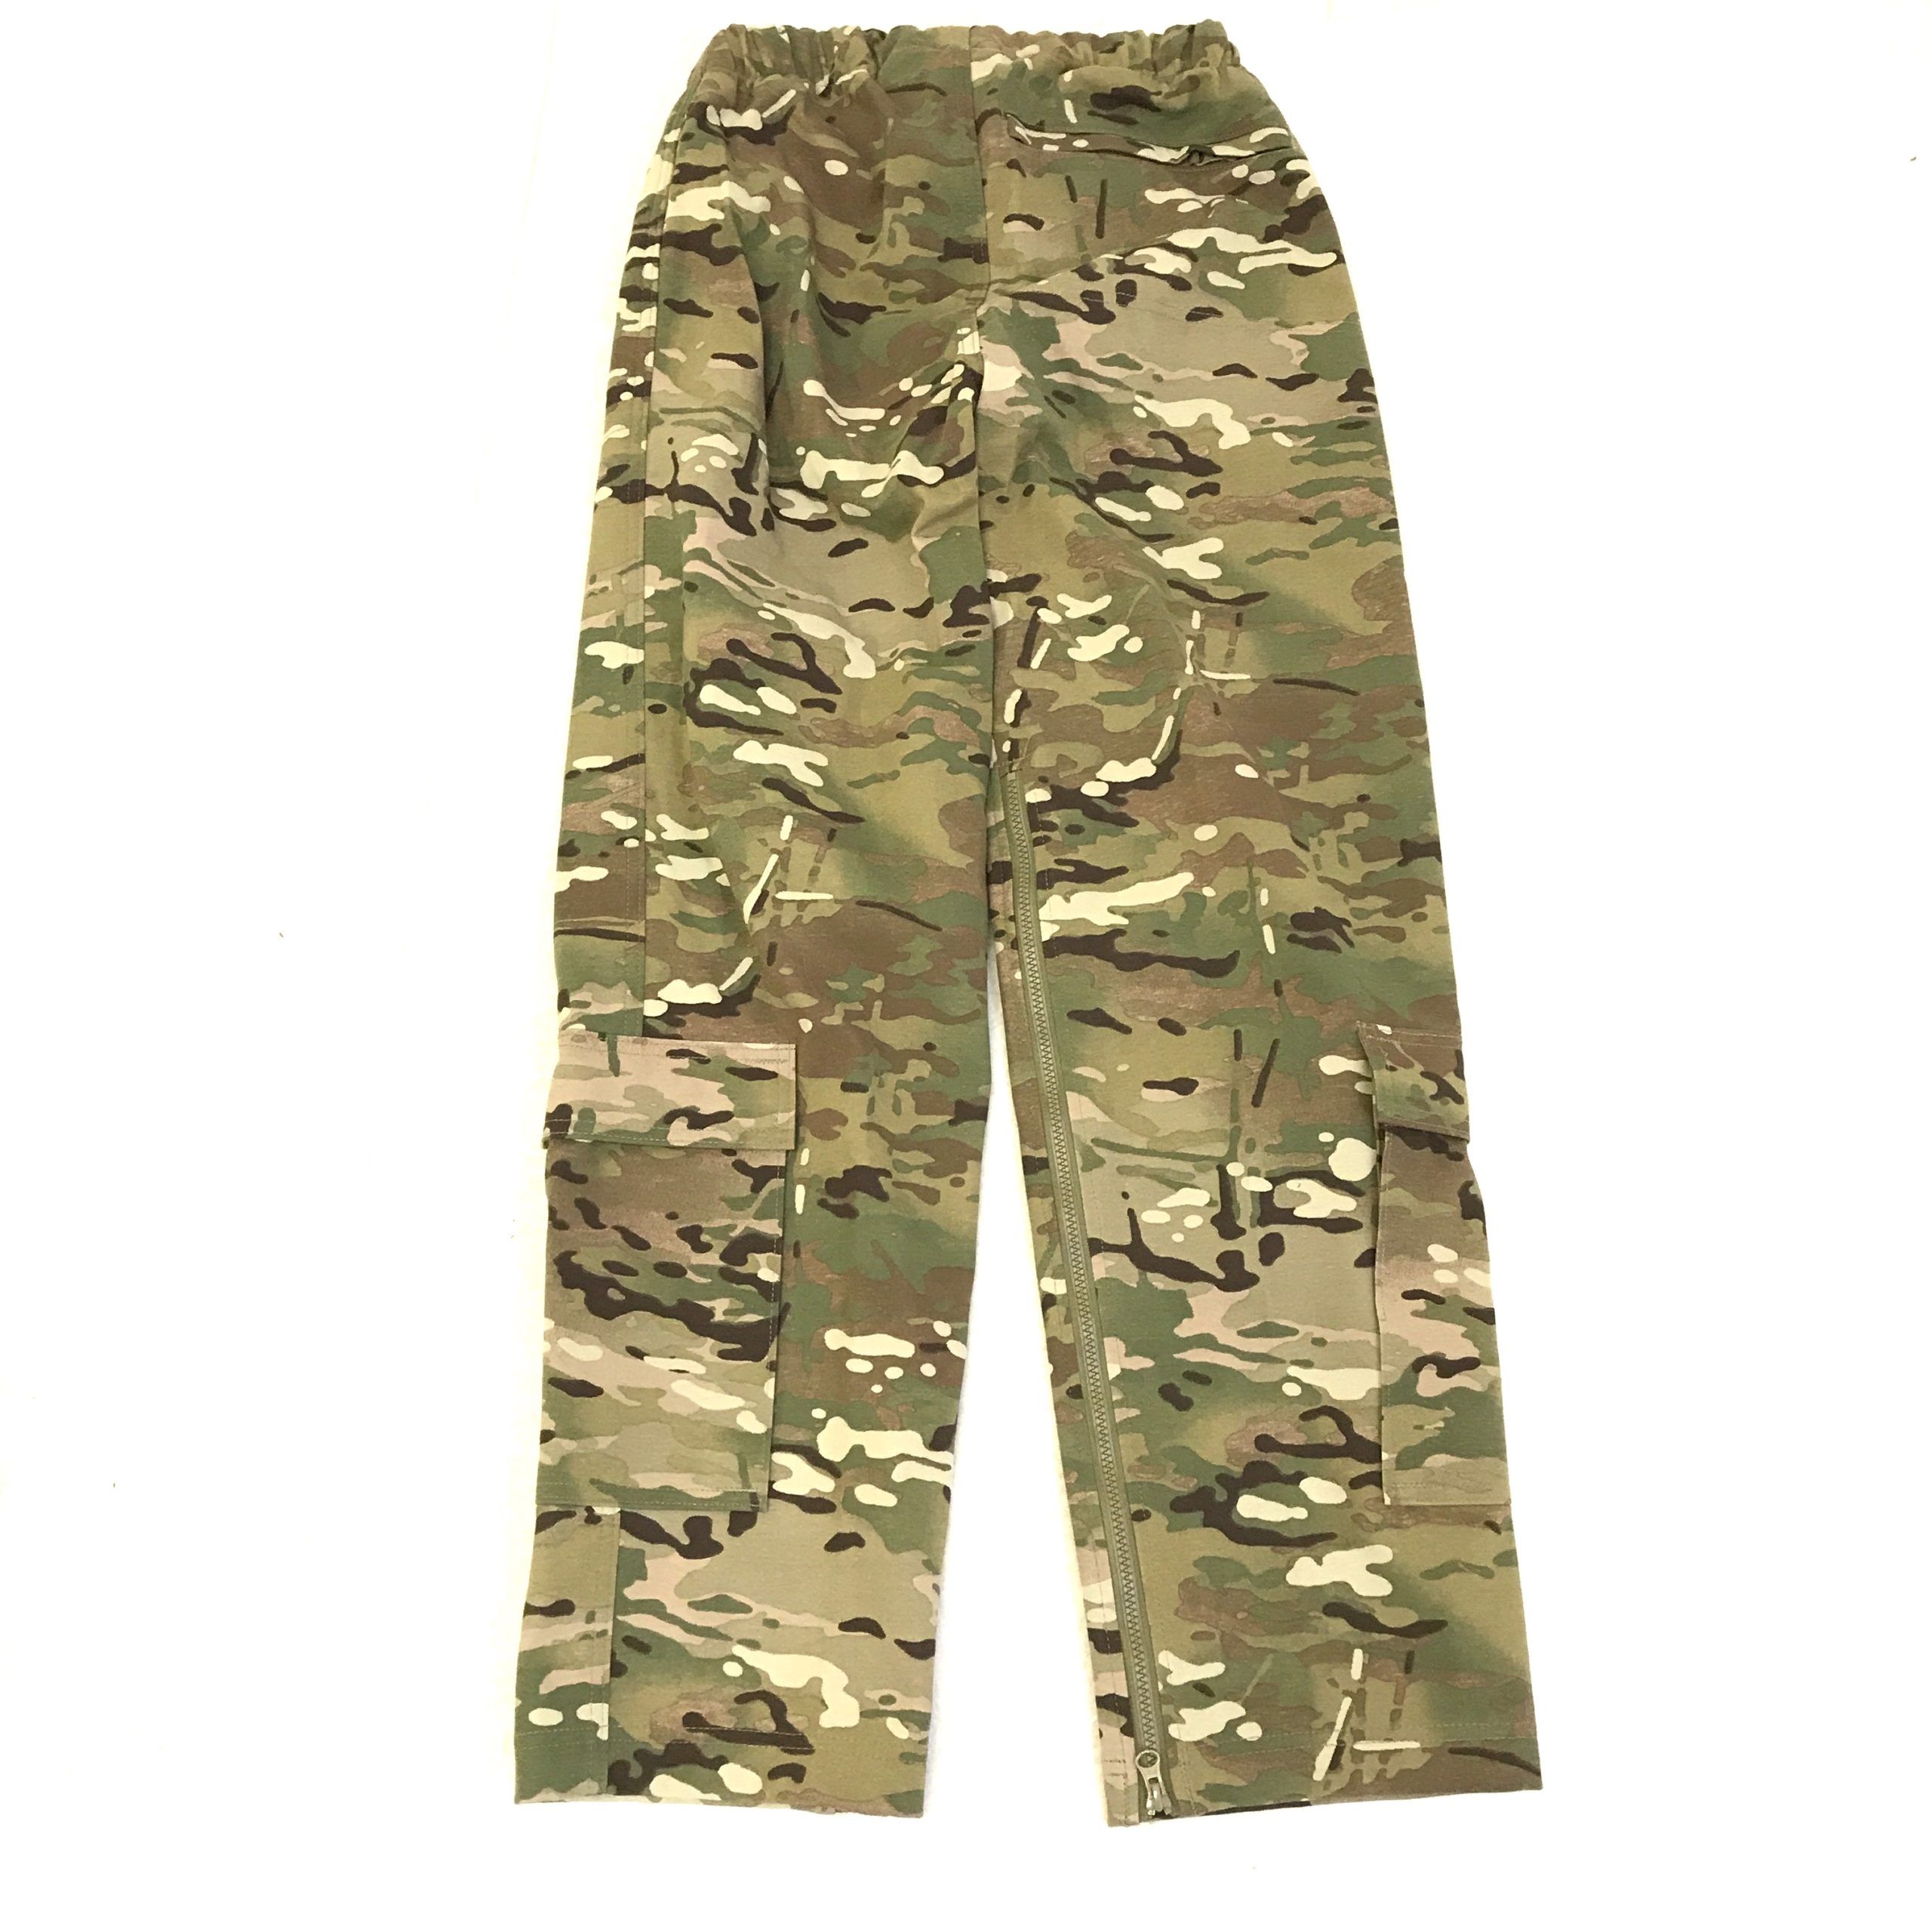 US Army LWOL Pants, Multicam [Genuine US Army Issue]